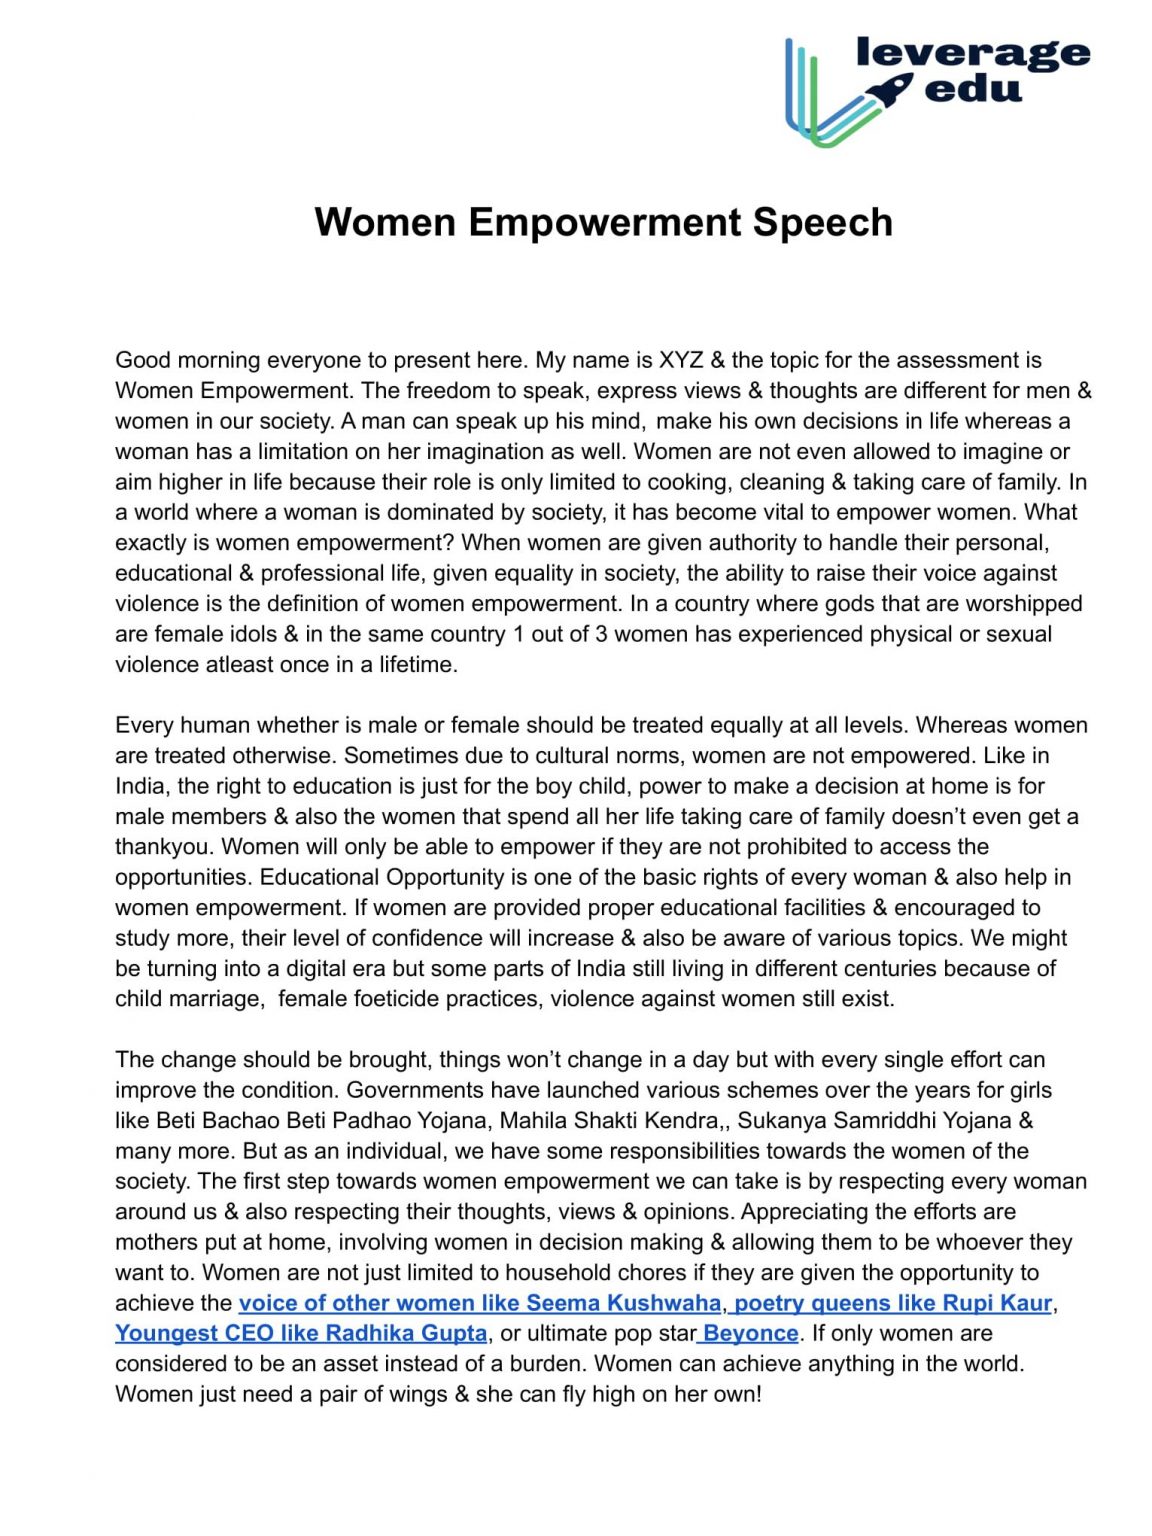 speech on women's empowerment in 200 words in english